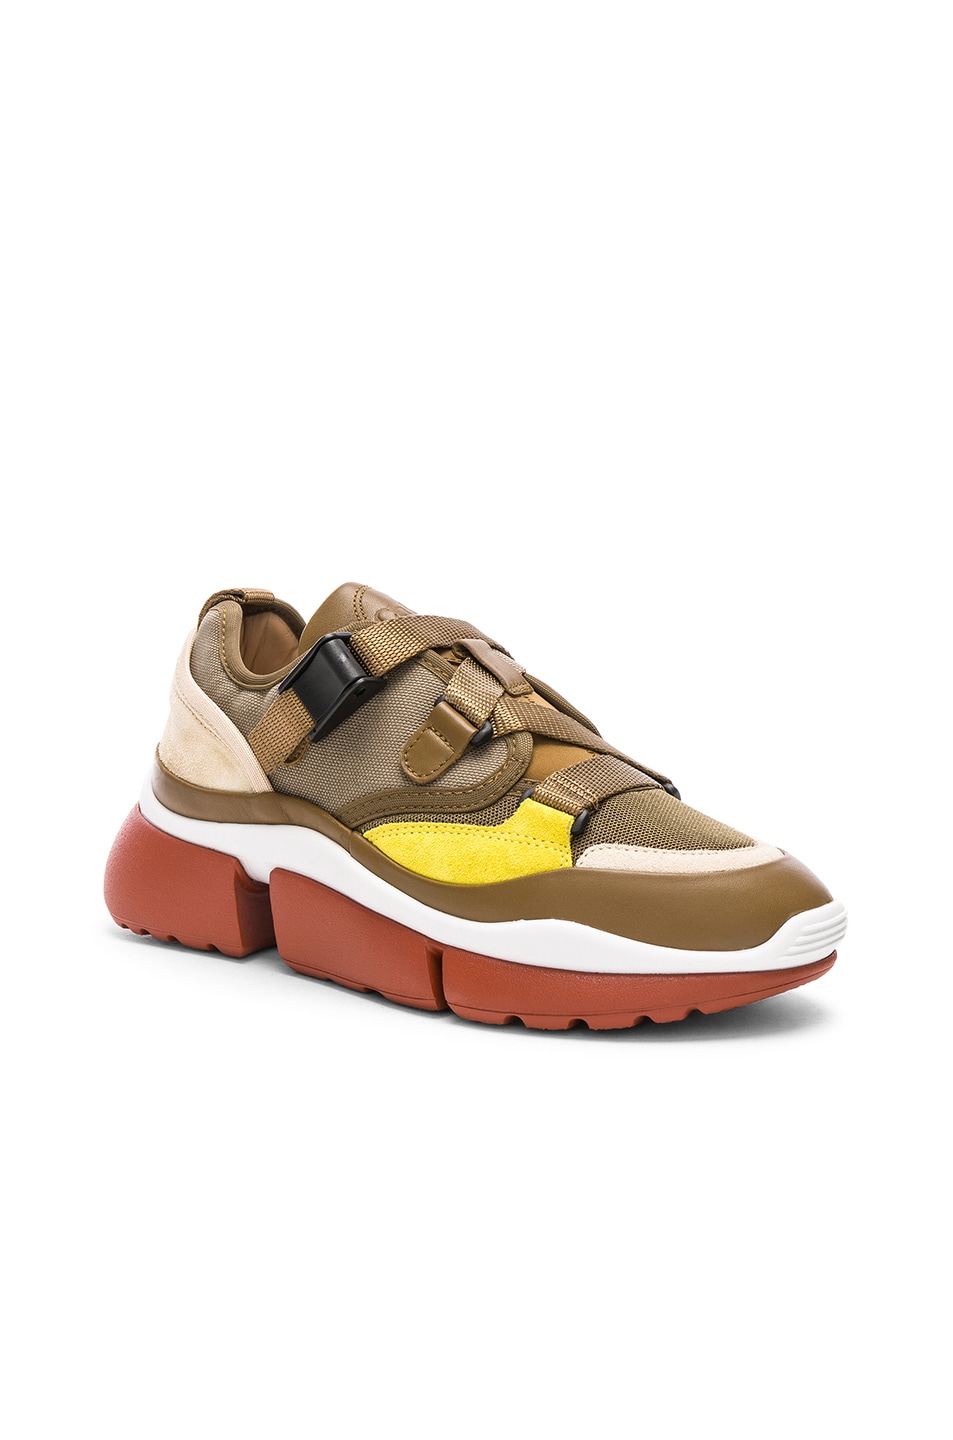 Chloe Sonnie Leather Velcro Strap Sneakers in Sooty Khaki | FWRD